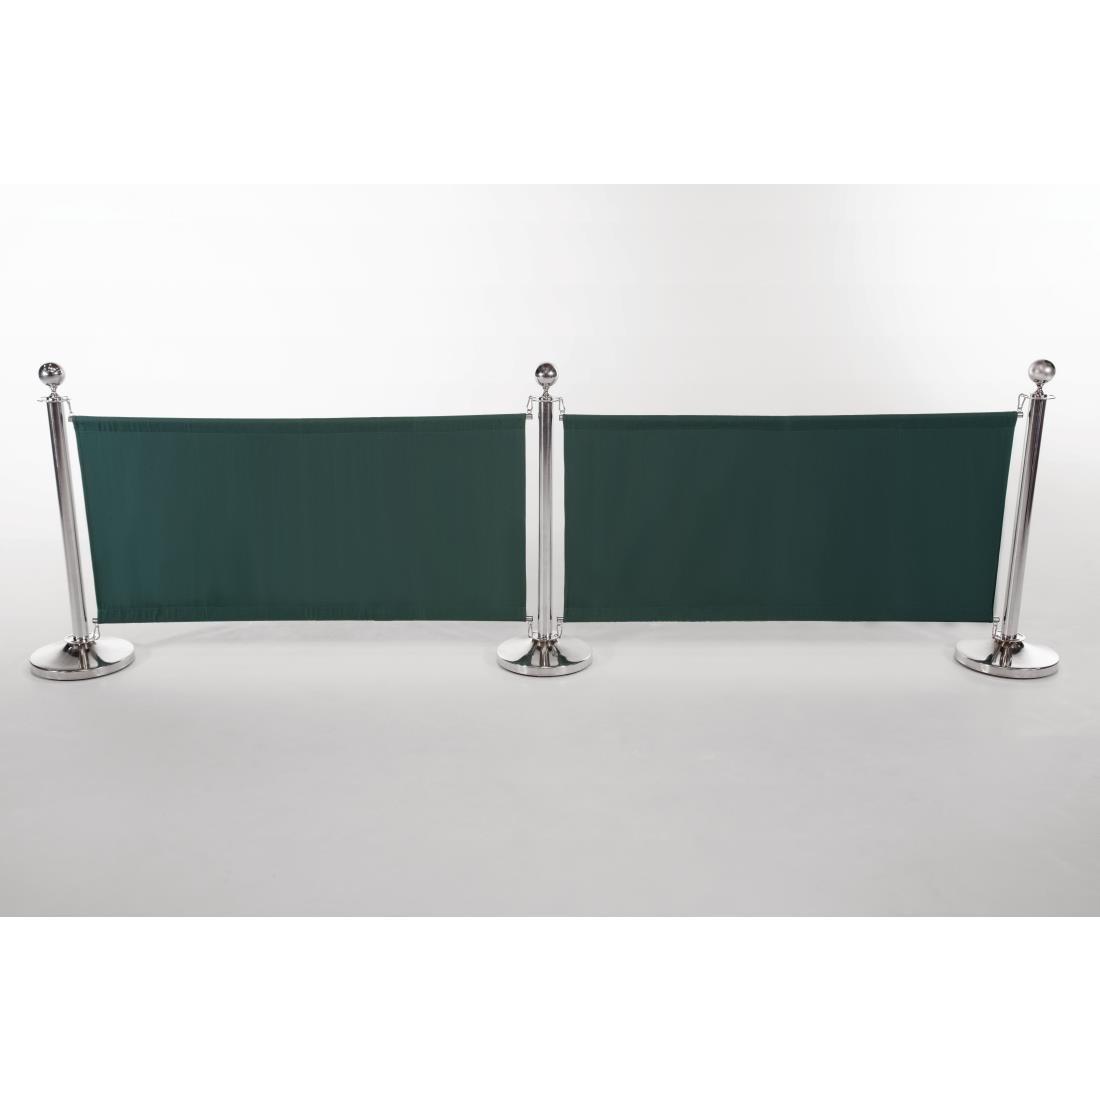 Bolero Green Canvas Barrier - CG222  - 2